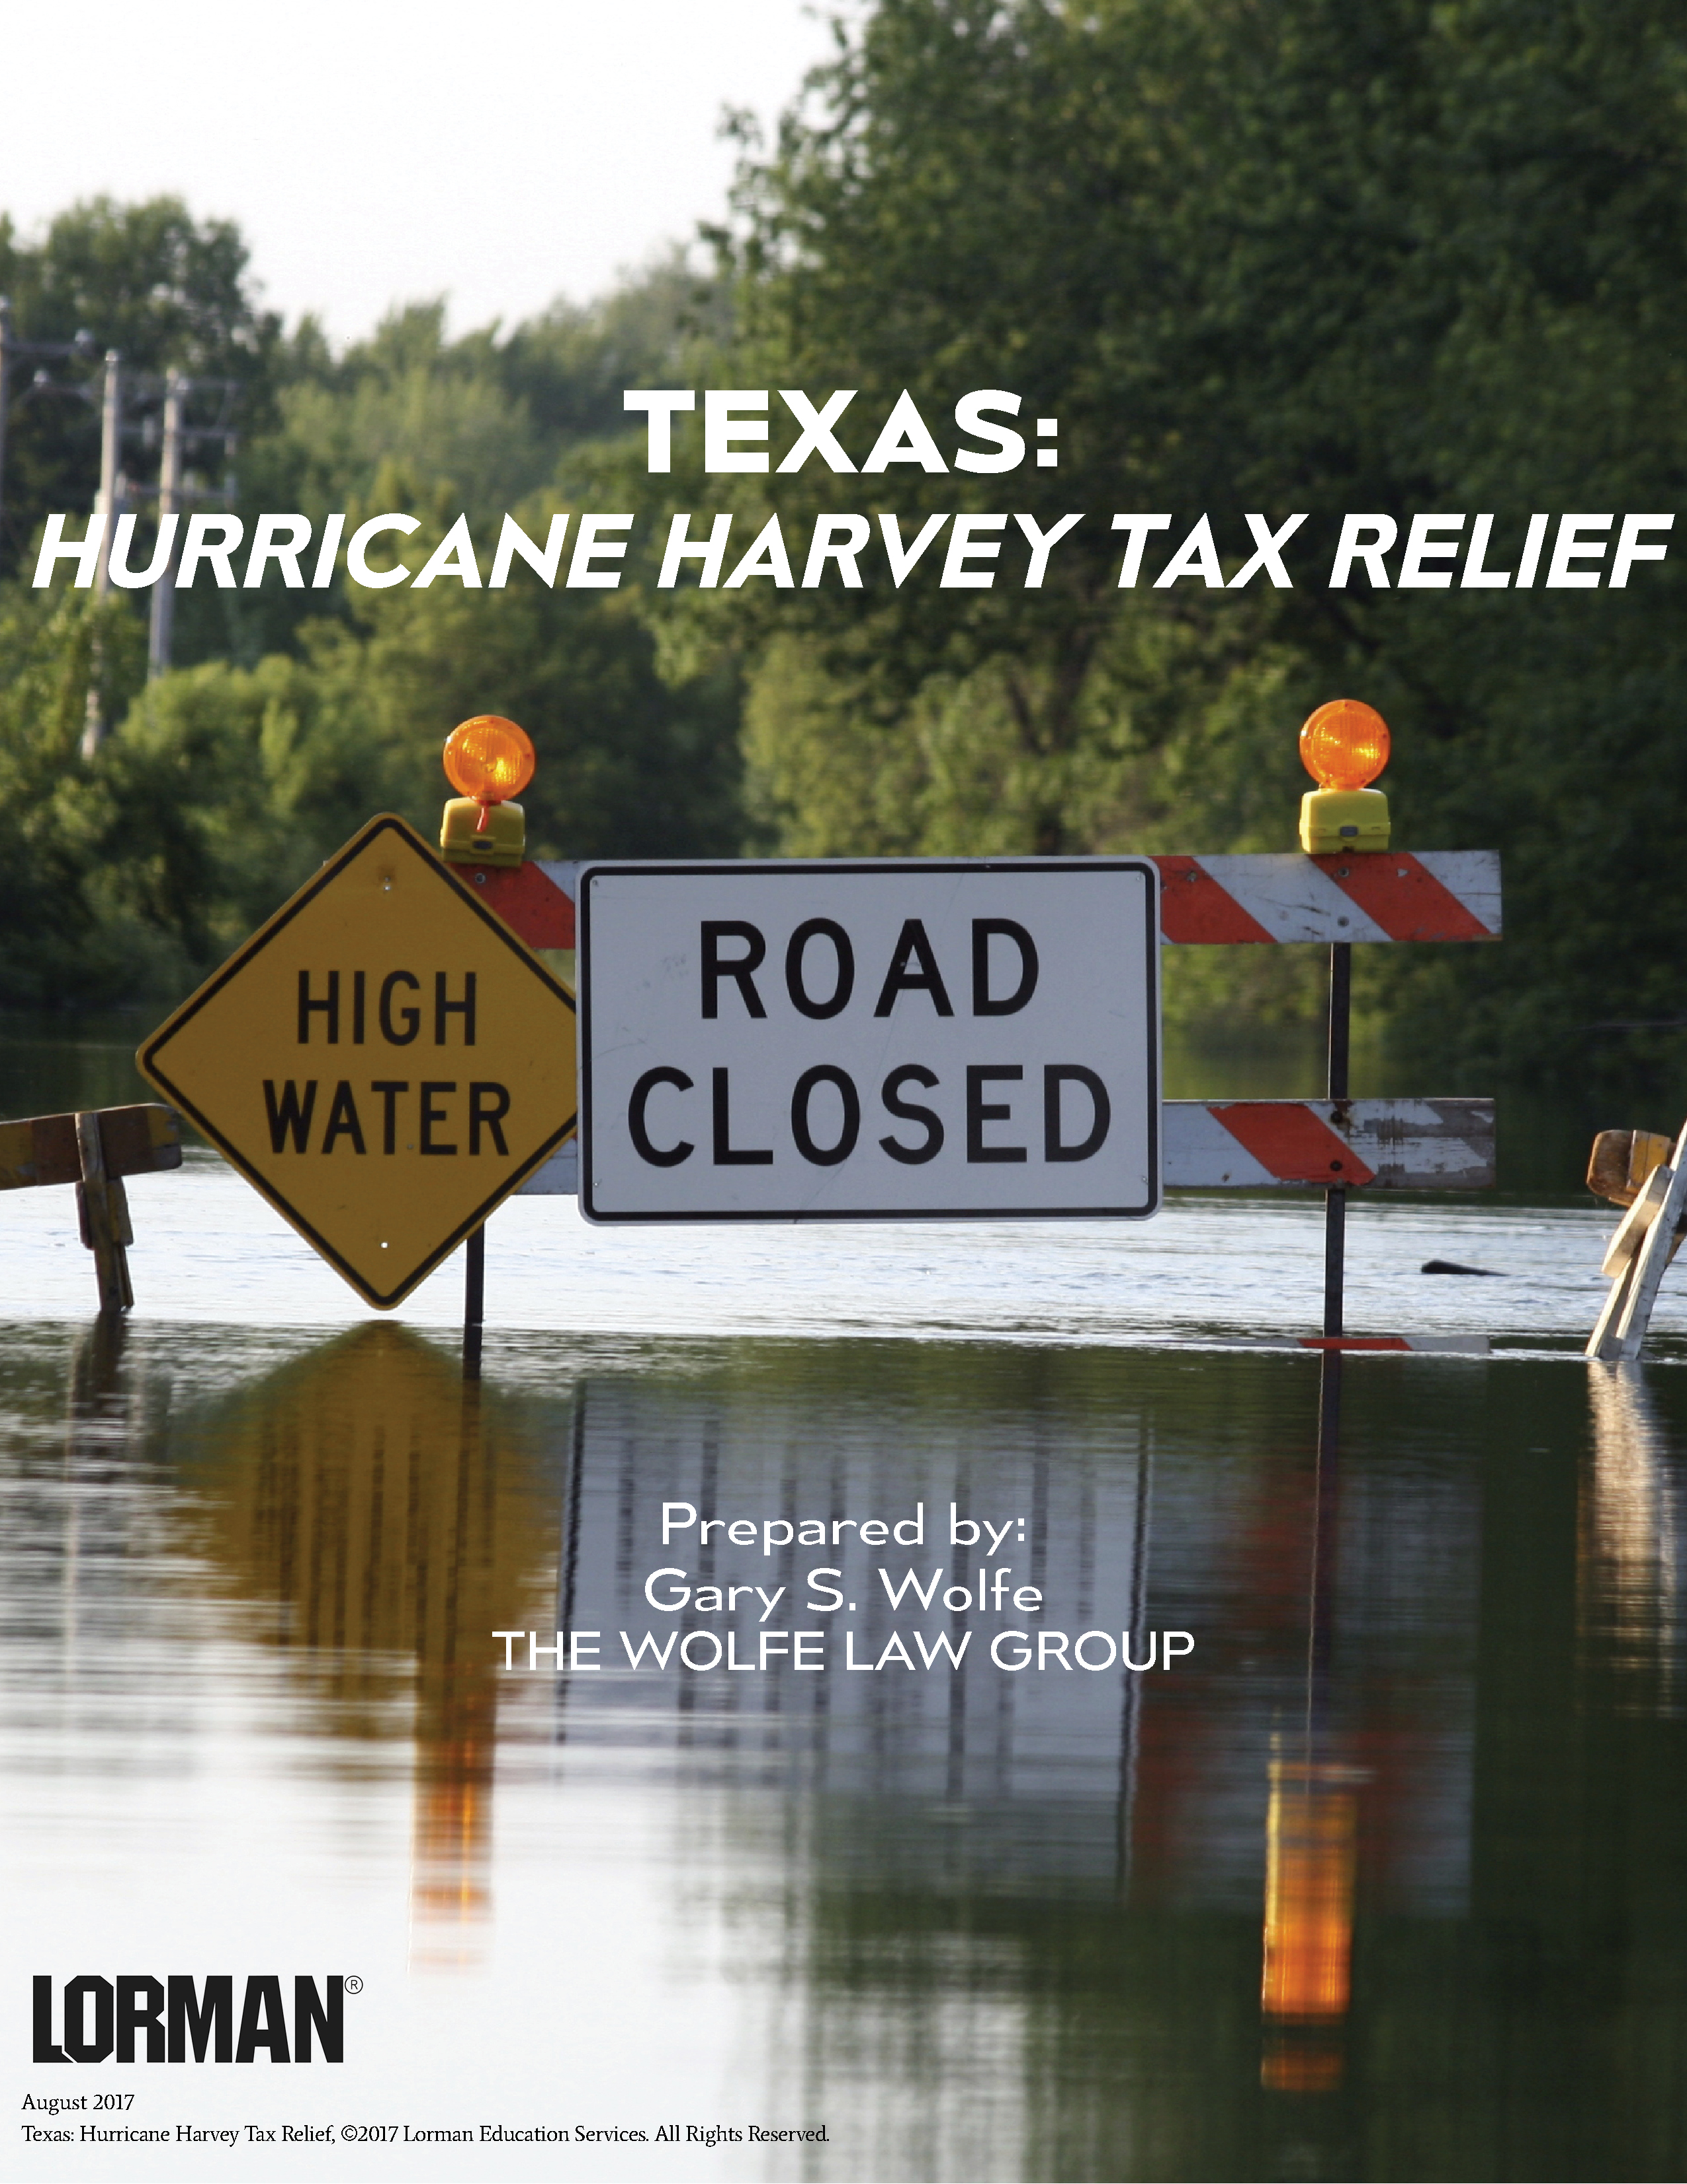 Texas: Hurricane Harvey Tax Relief